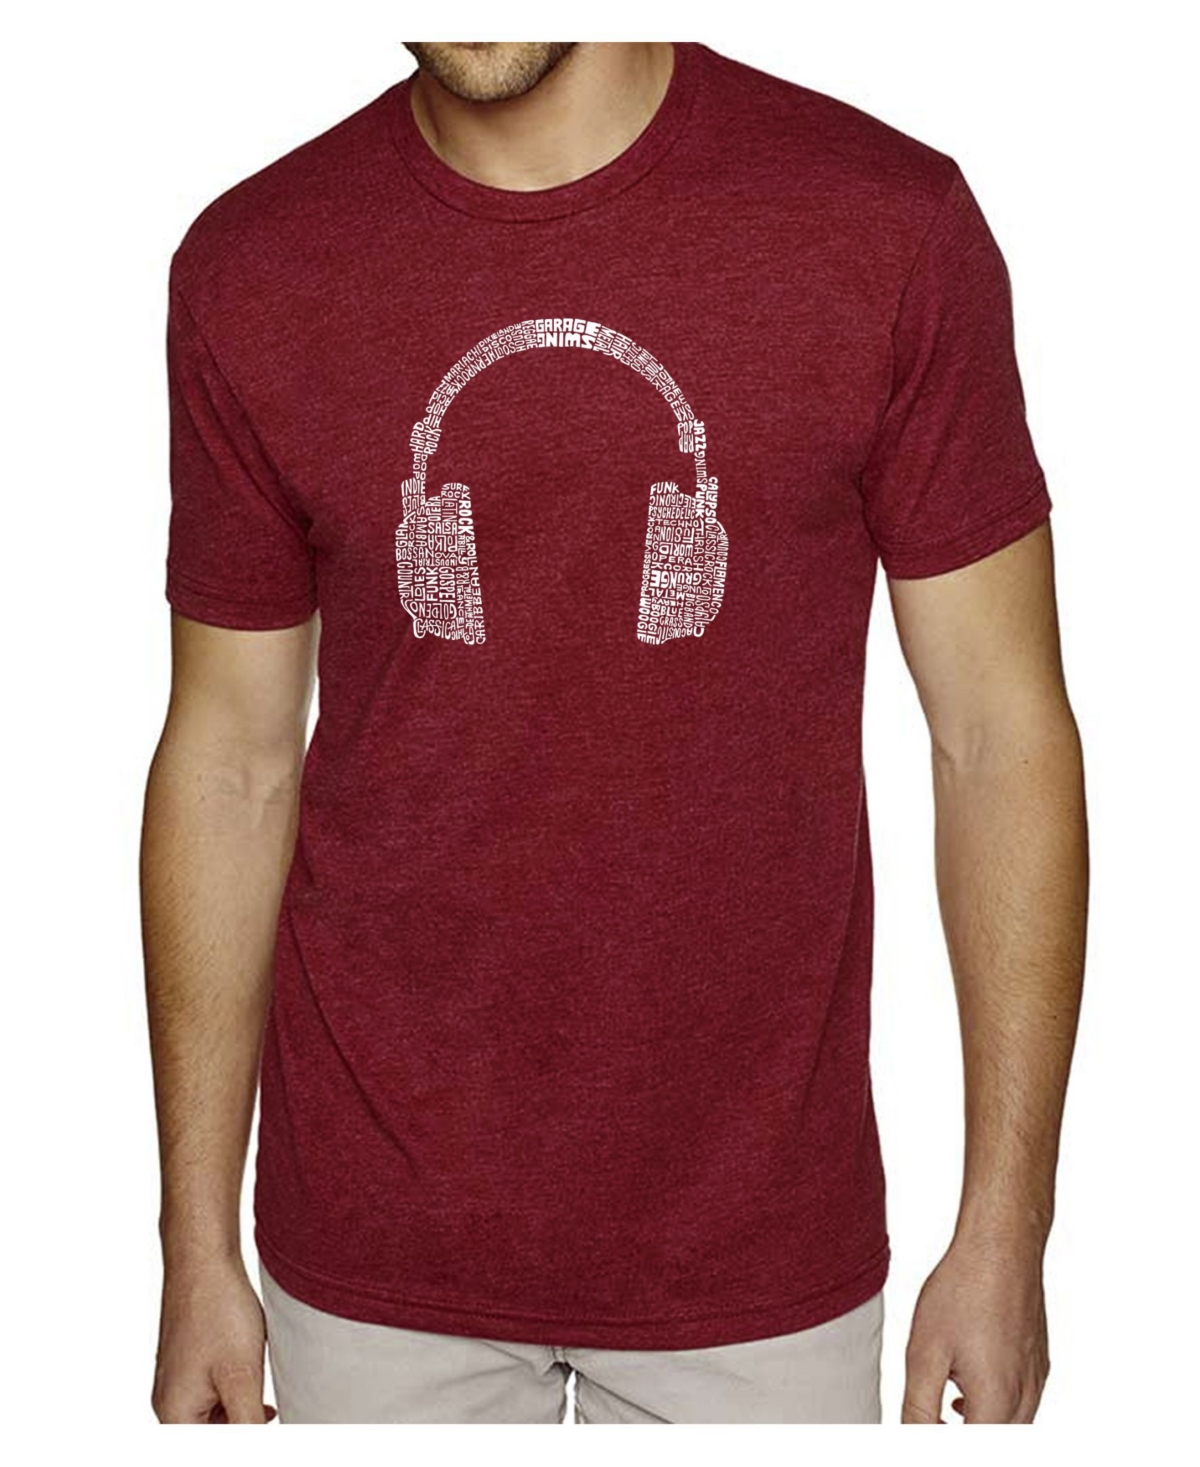 Mens Premium Blend Word Art T-Shirt - Headphones - Music Genres - Burgundy